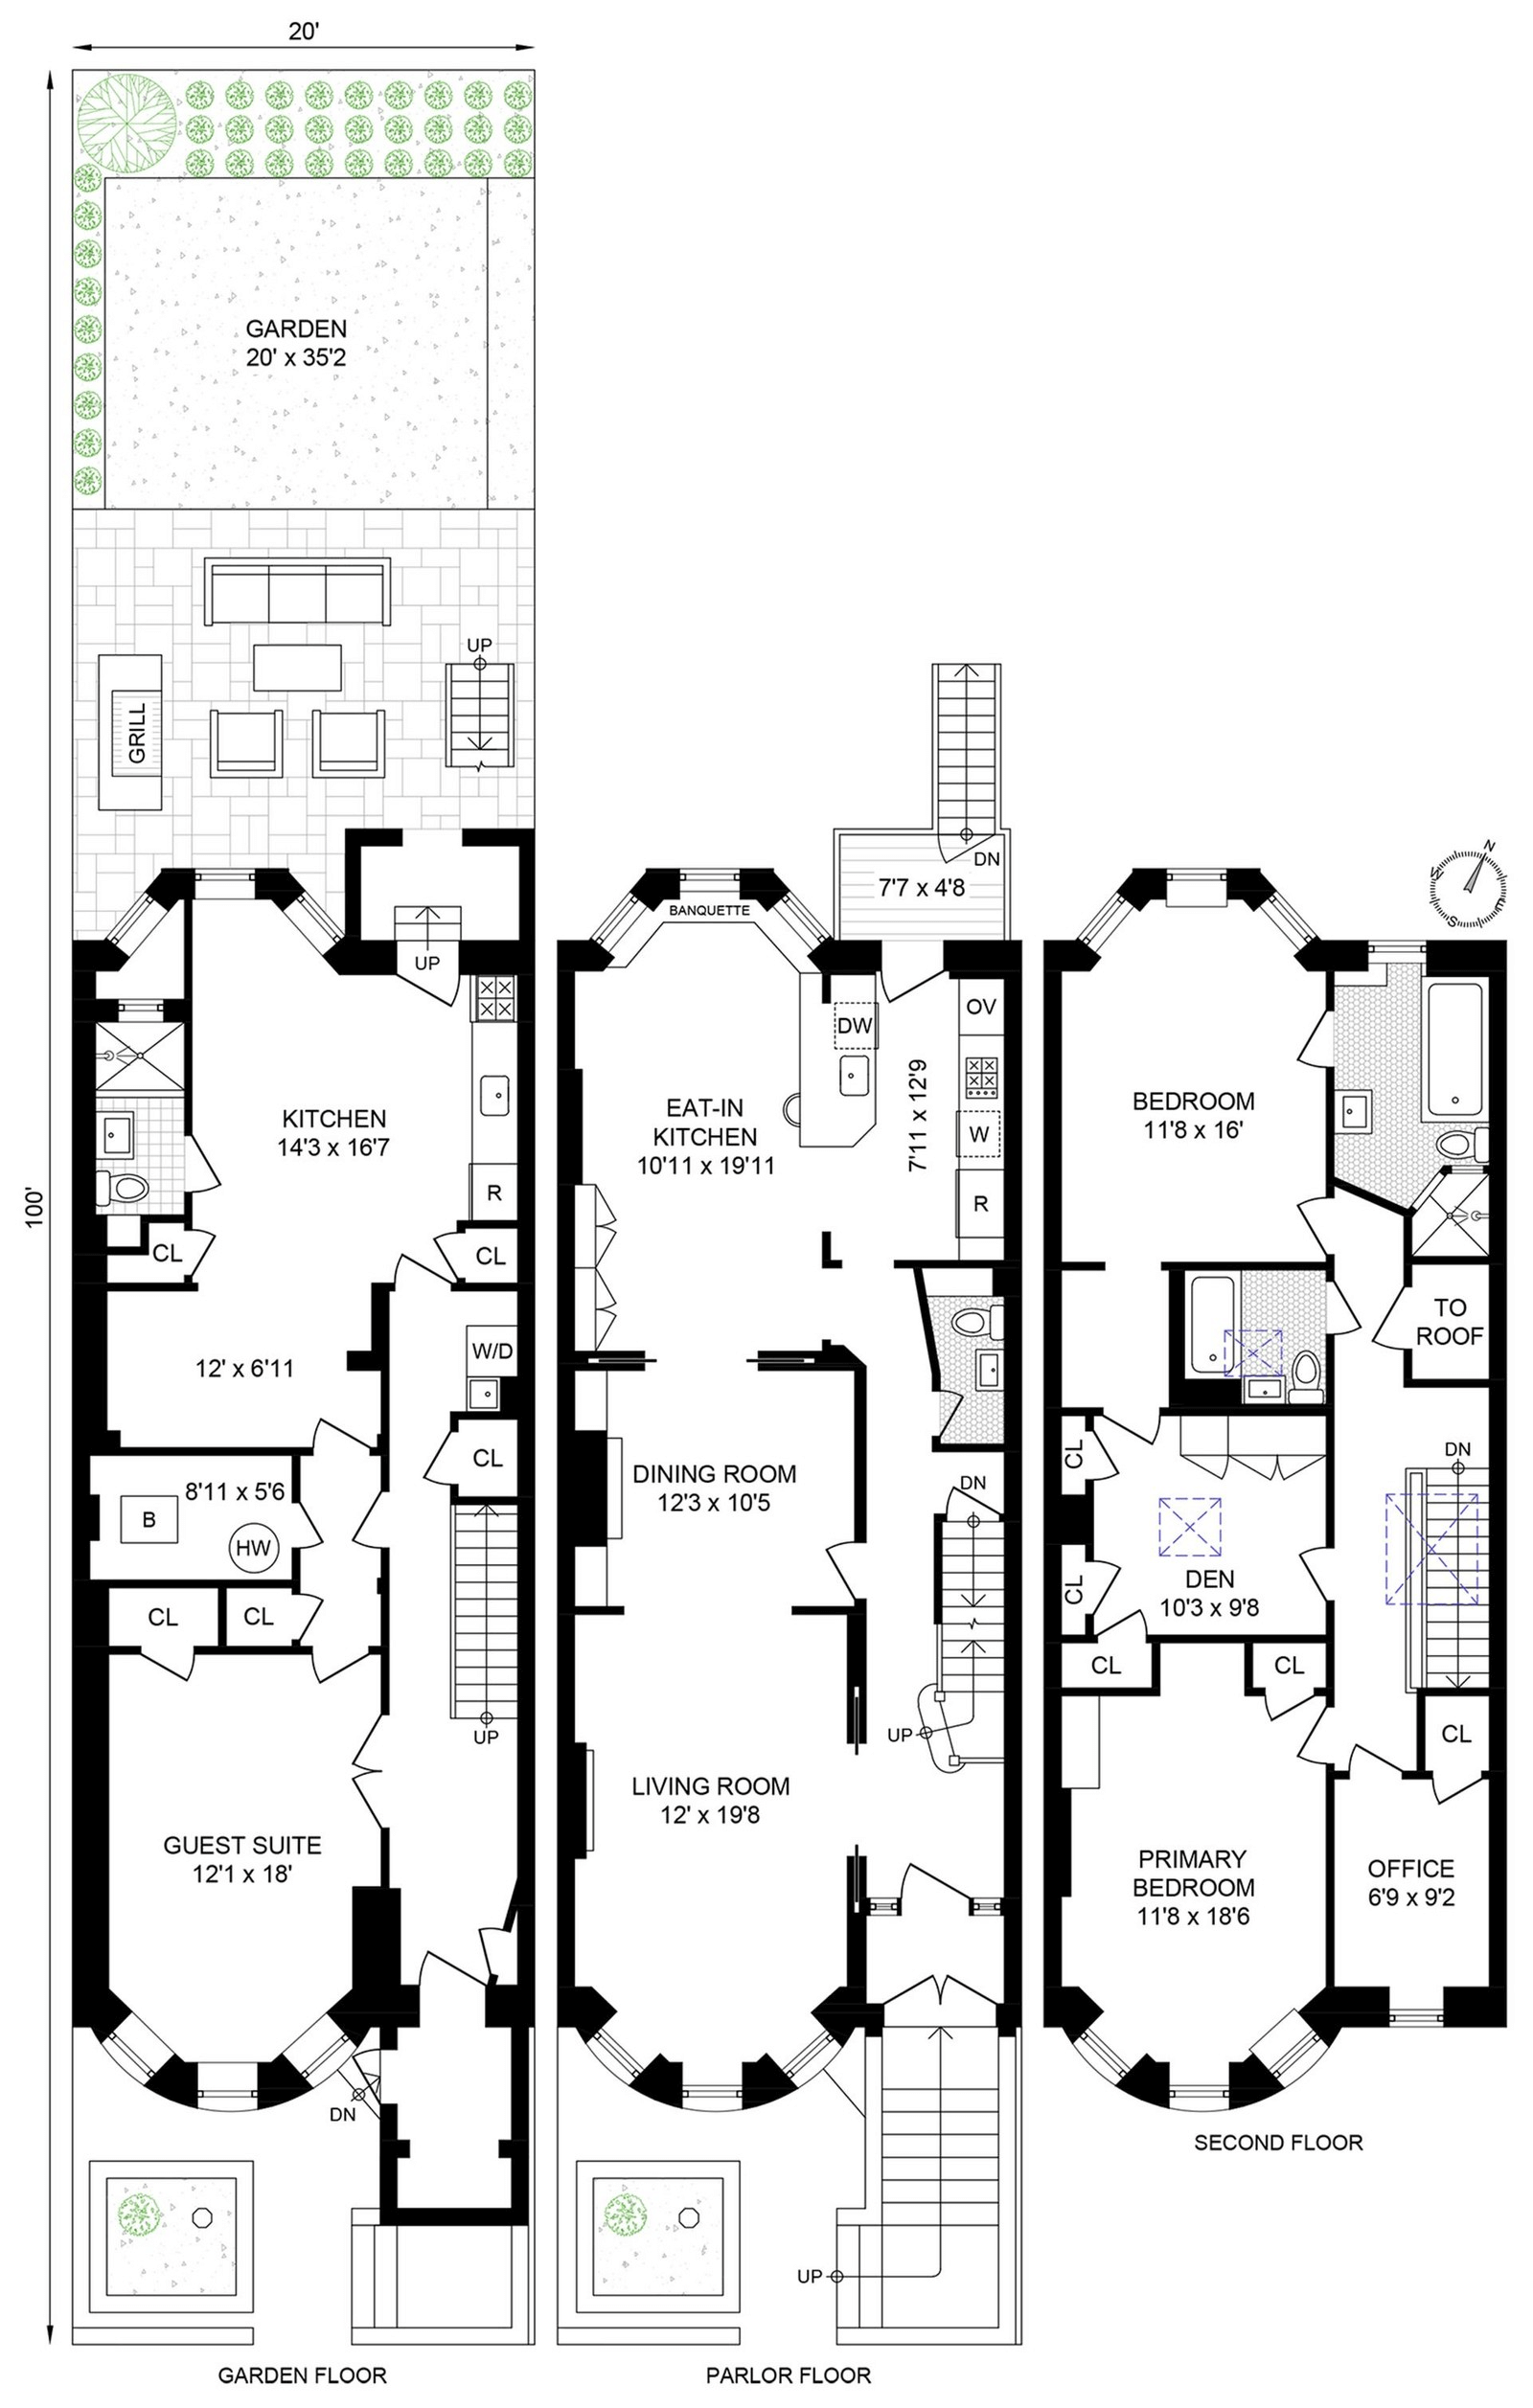 floorplan of 181 fenimore street